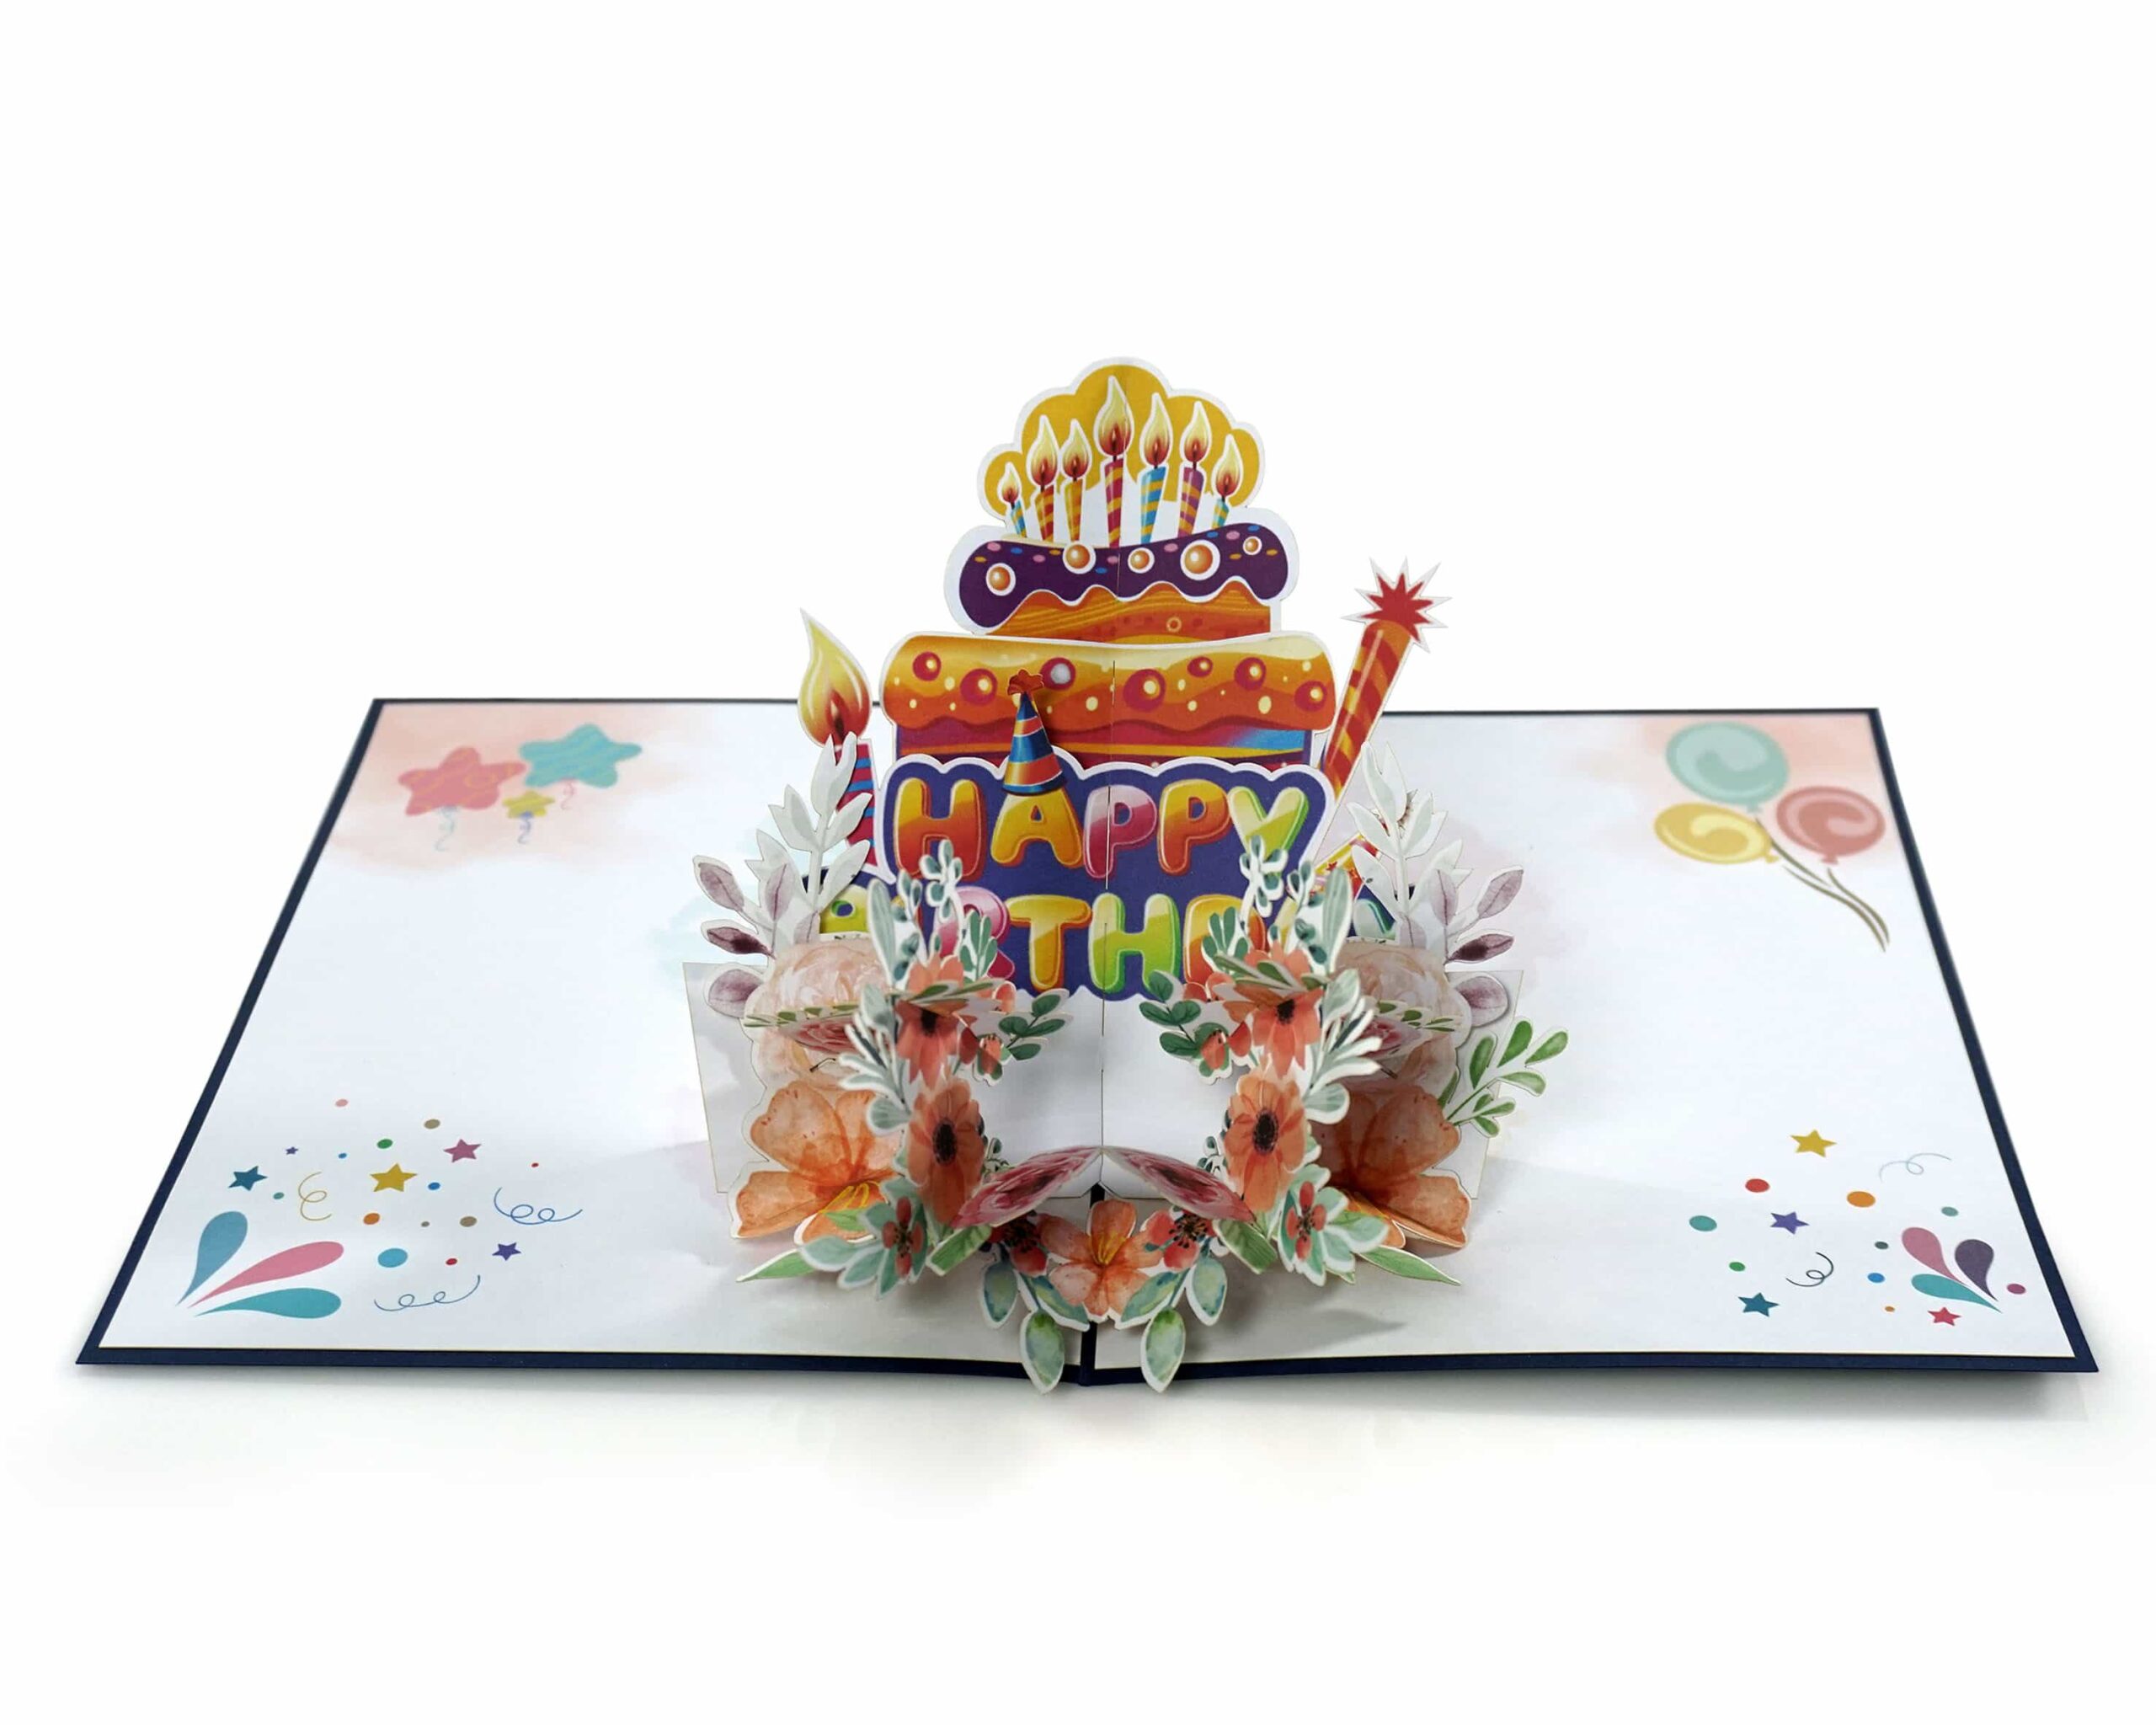 HMG-Bulk-Cake-Birthday-3D-Popup-card-made-in-Vietnam